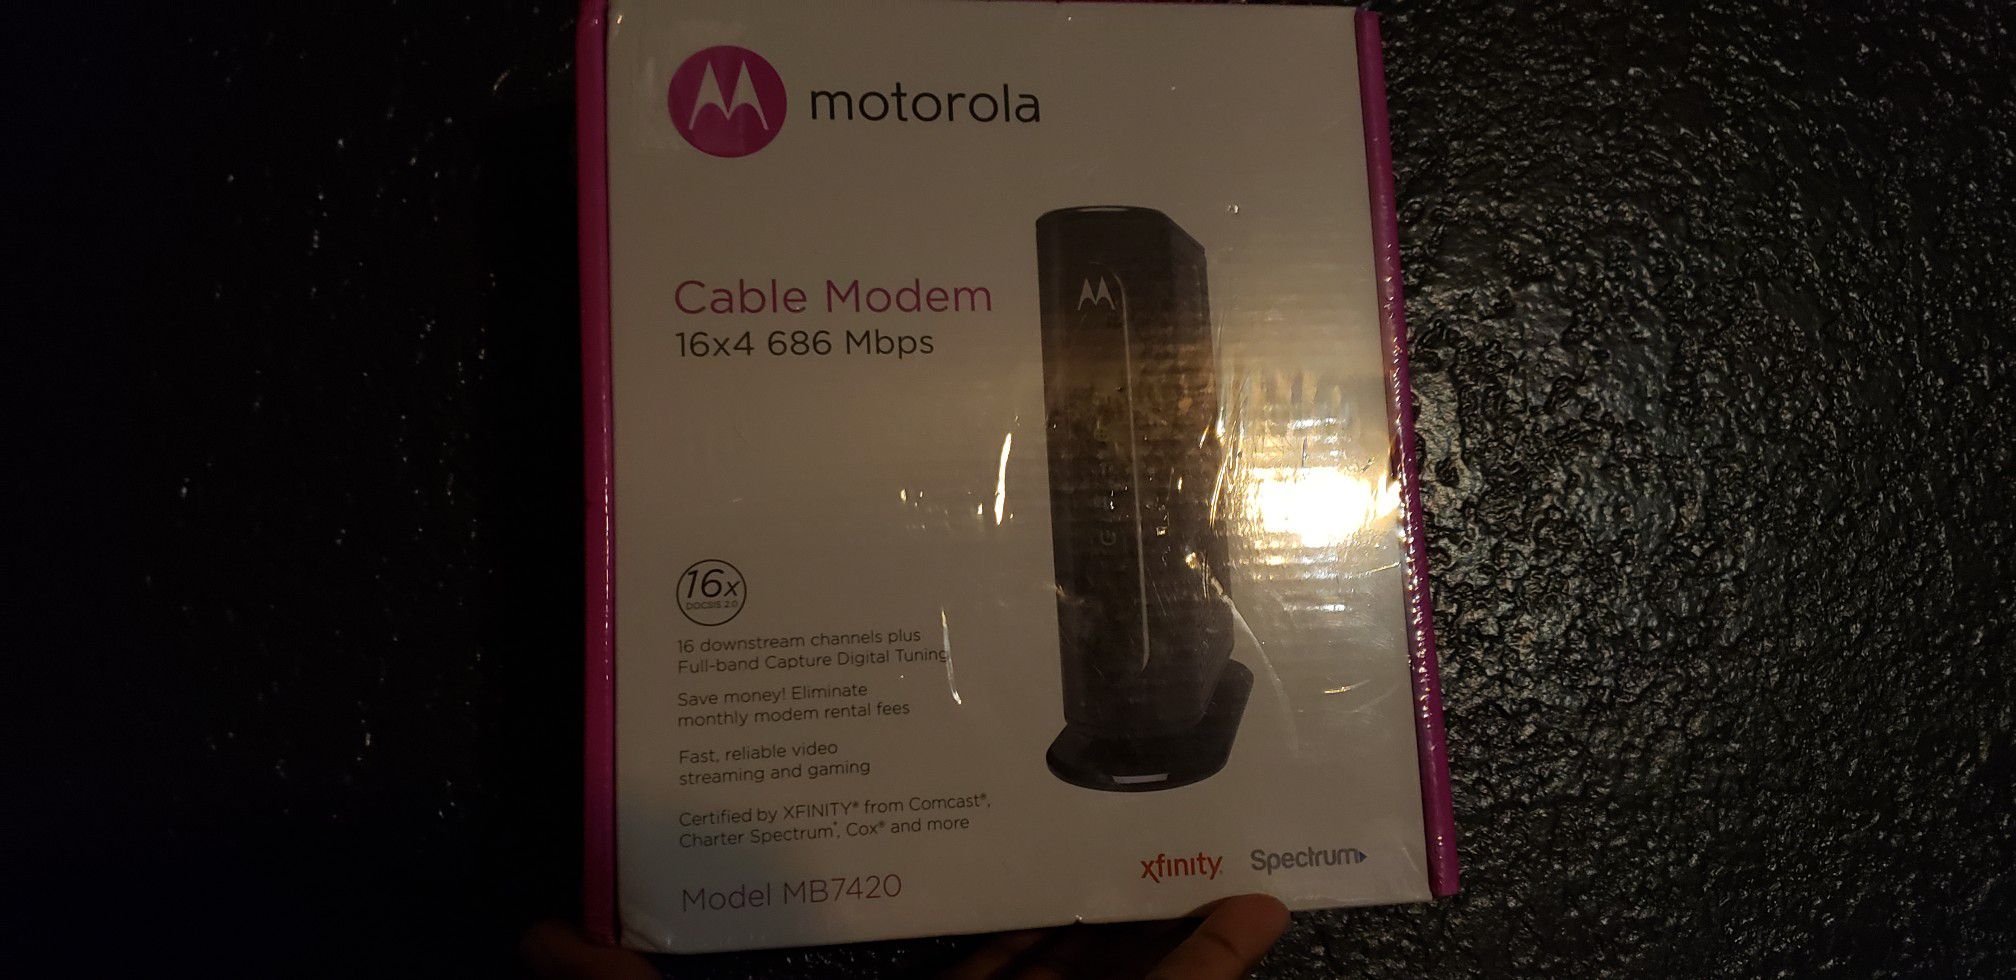 Motorola cable modem $50 Brand new